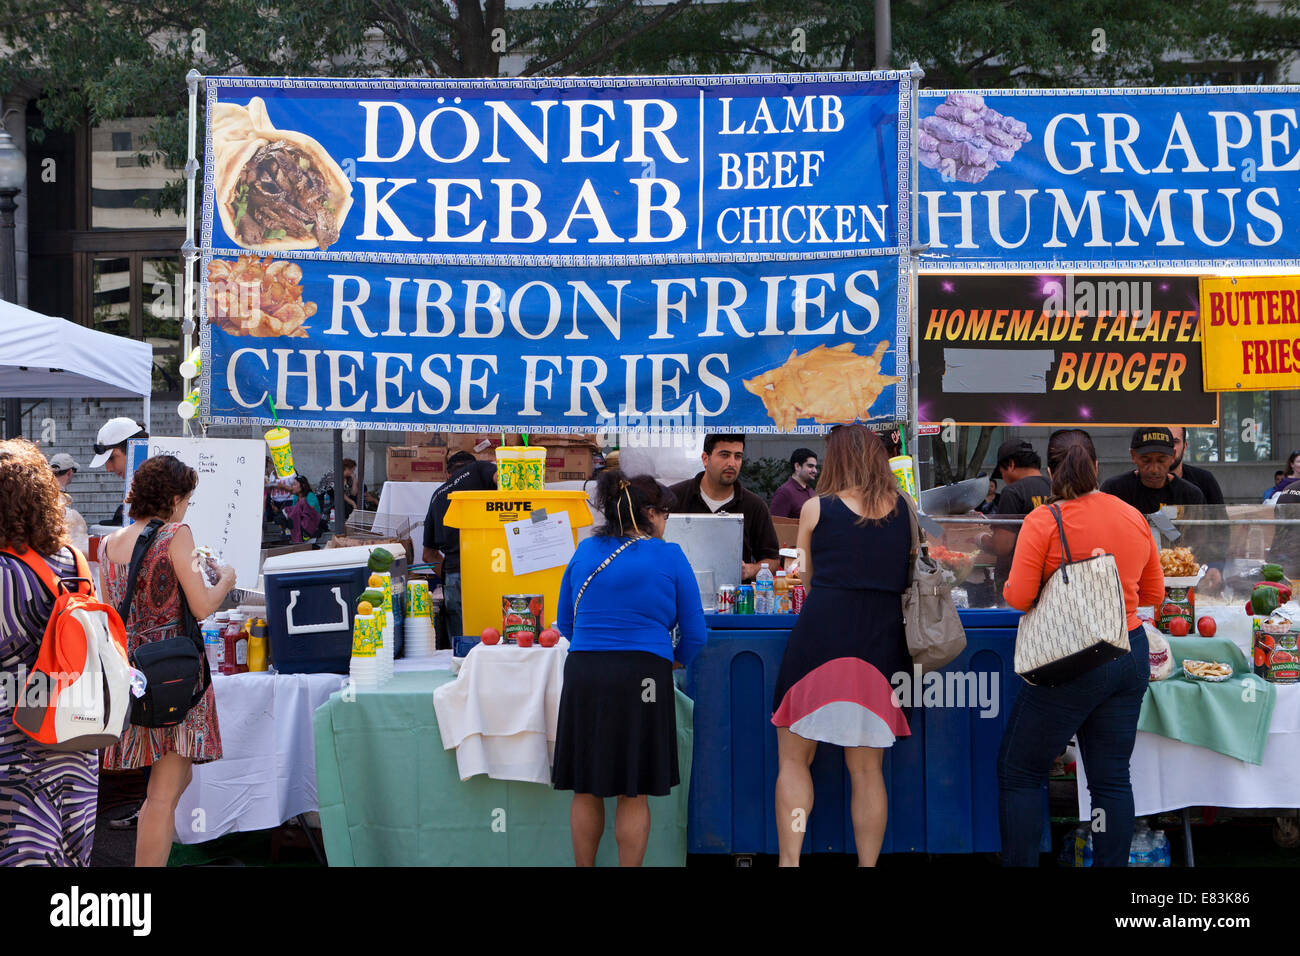 Doner kebab food stall at outdoor festival - USA Stock Photo